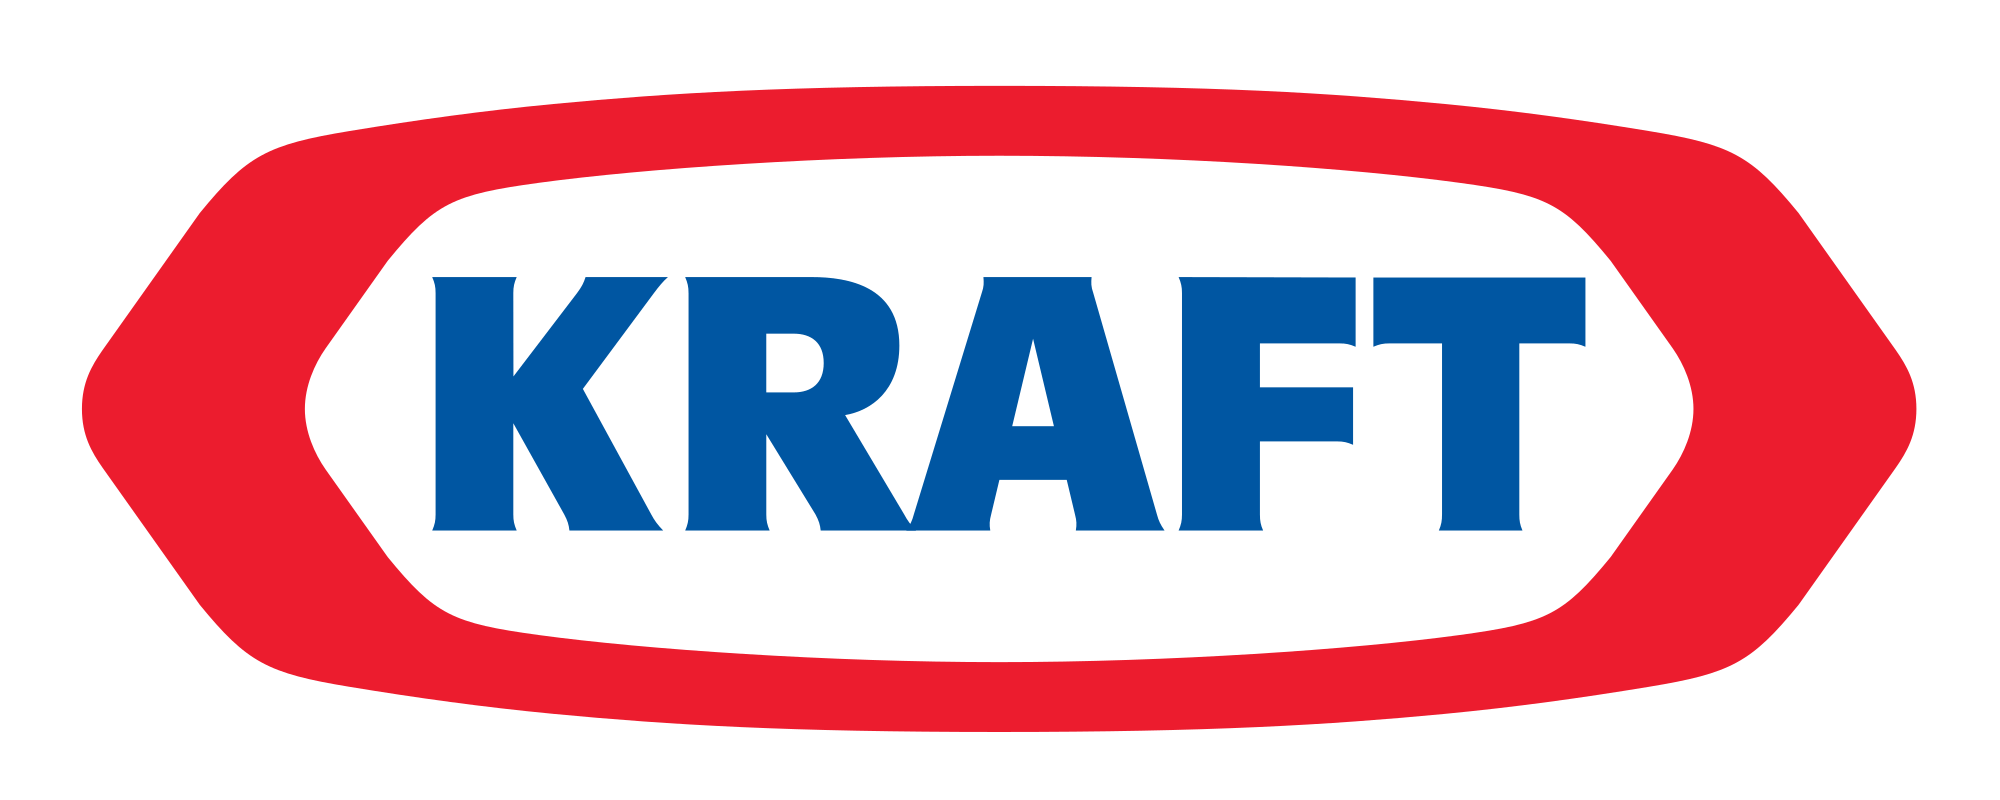 Kraft Logo - File:Kraft logo.svg - Wikimedia Commons